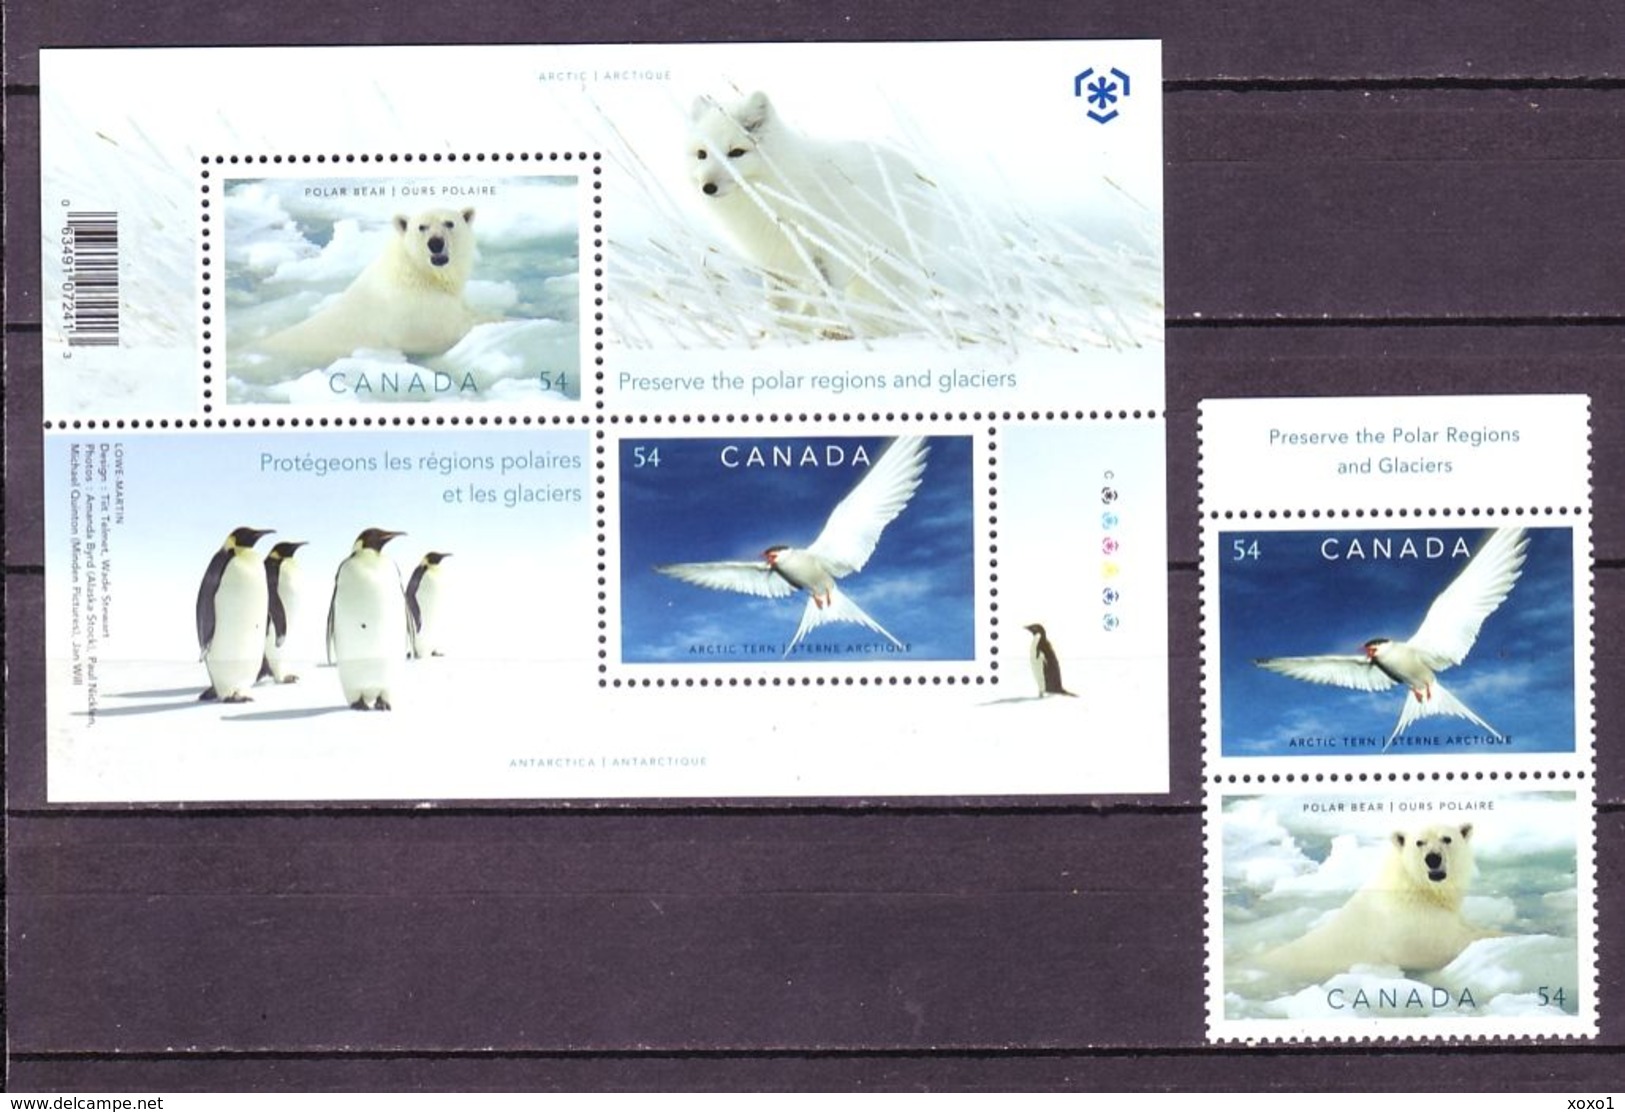 Canada 2009 MiNr. 2547 - 2548 (Block 113) Kanada Fauna BIRDS POLAR YEAR 2v+1bl MNH** 4.80 € - Internationales Polarjahr